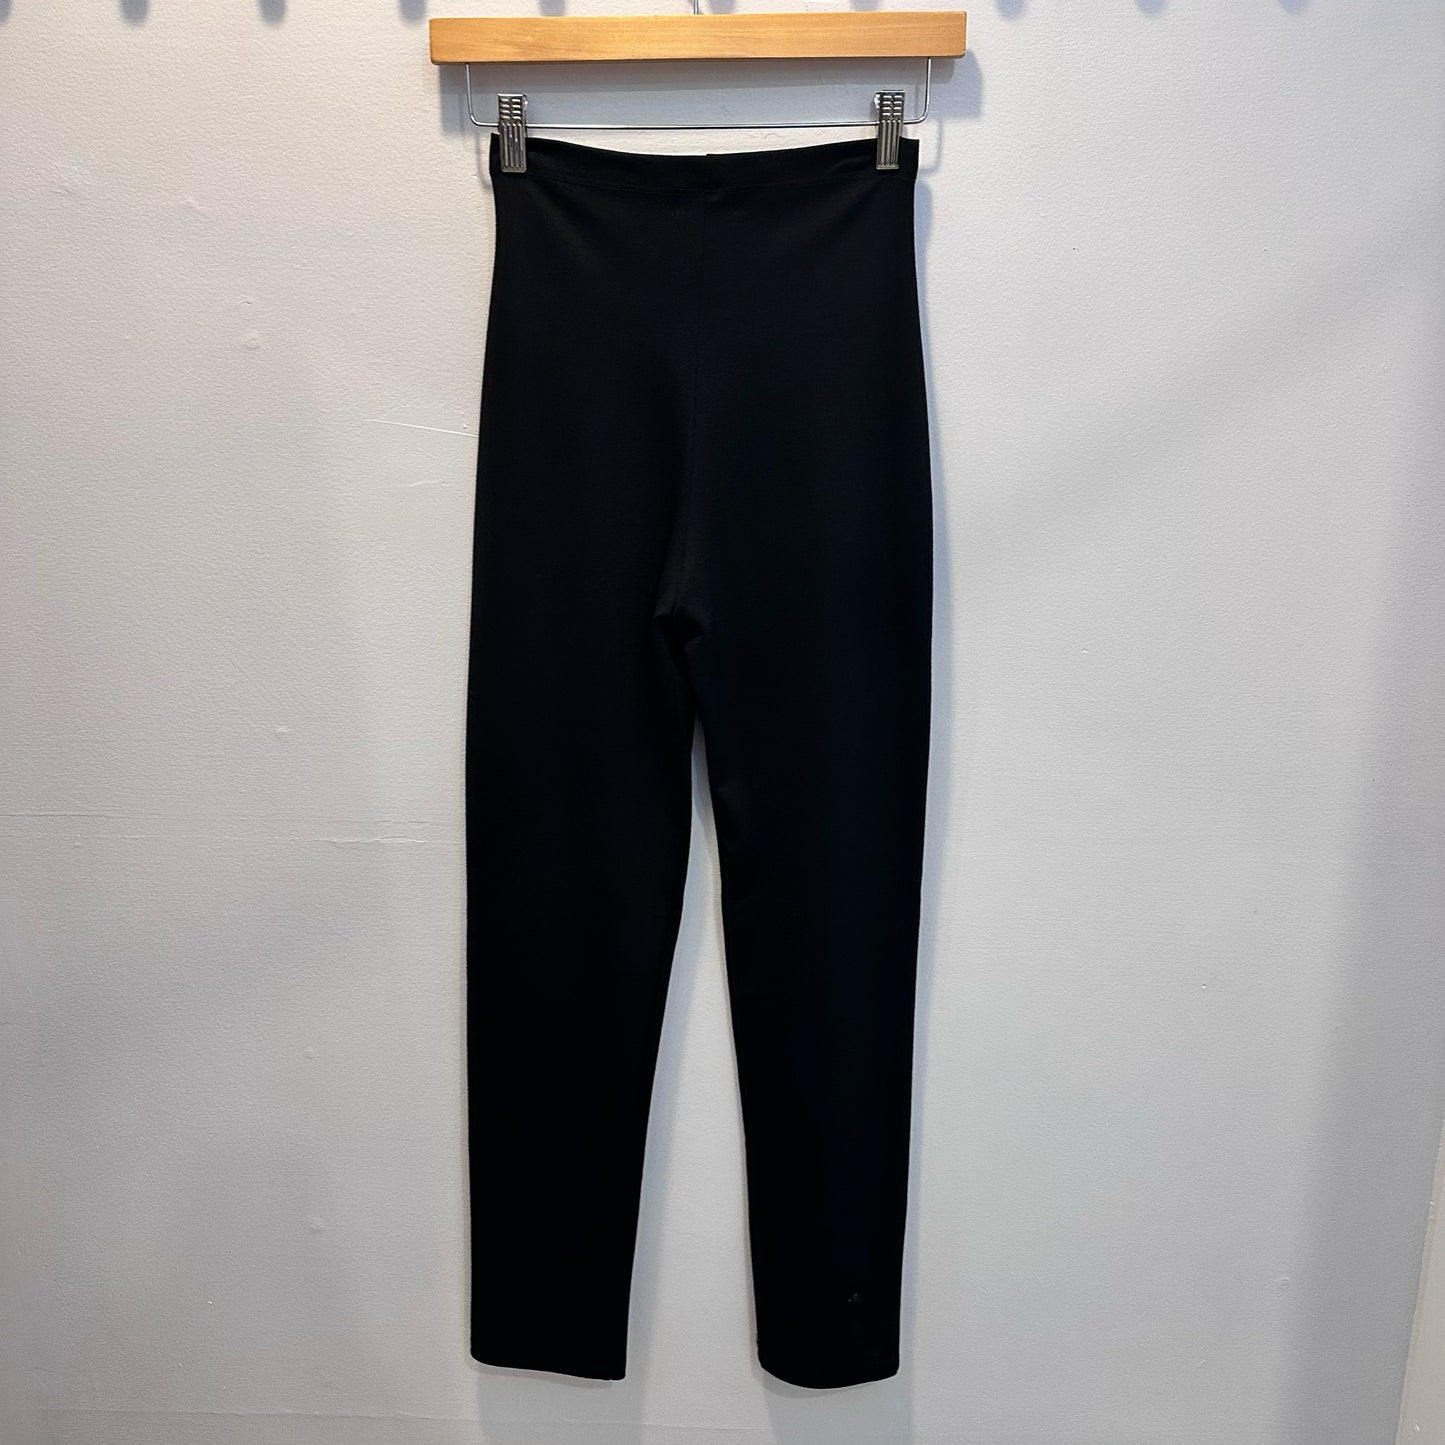 Ripley Rader Size XS Pants